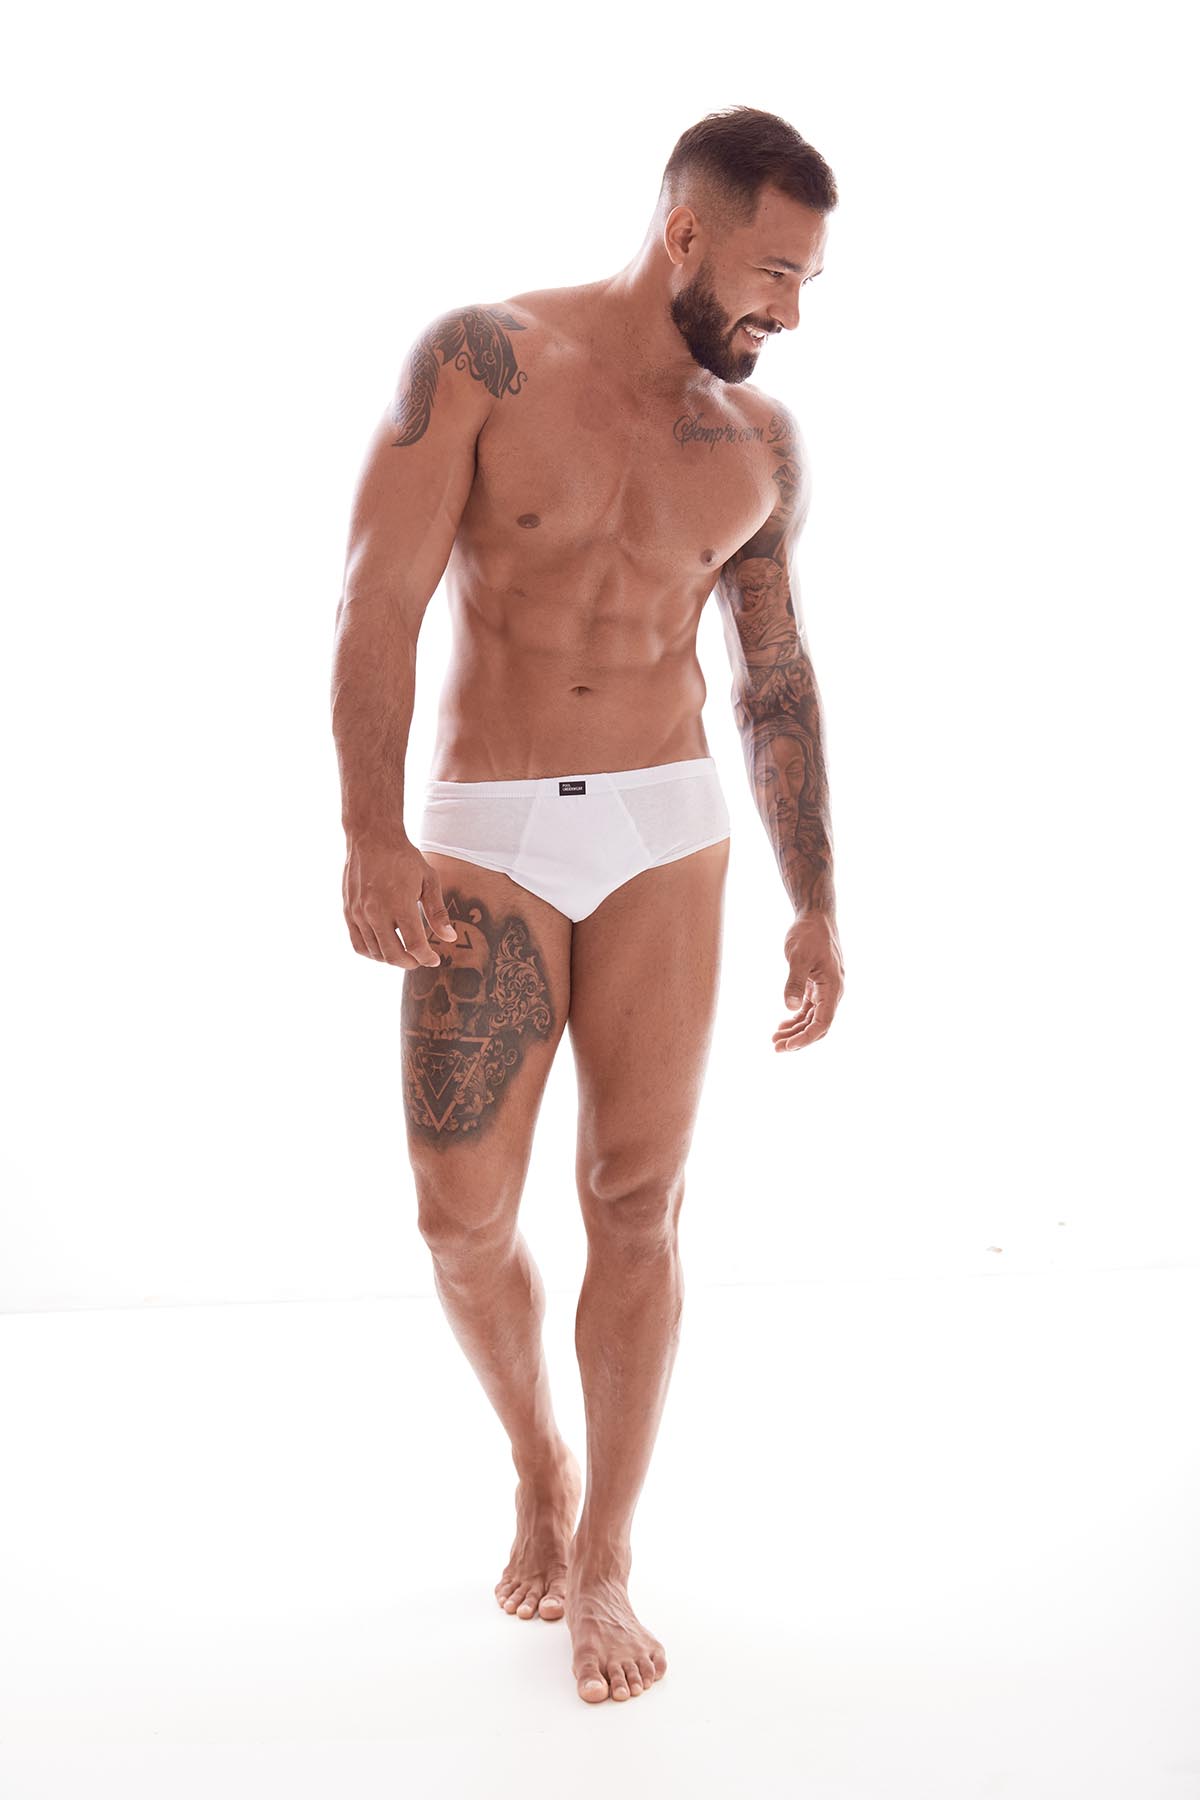 Bruno Mooneyhan by Pedro Fonseca for Brazilian Male Model 12 - 巴西硬汉男模 Bruno Mooneyhan / Pedro Fonseca摄影作品